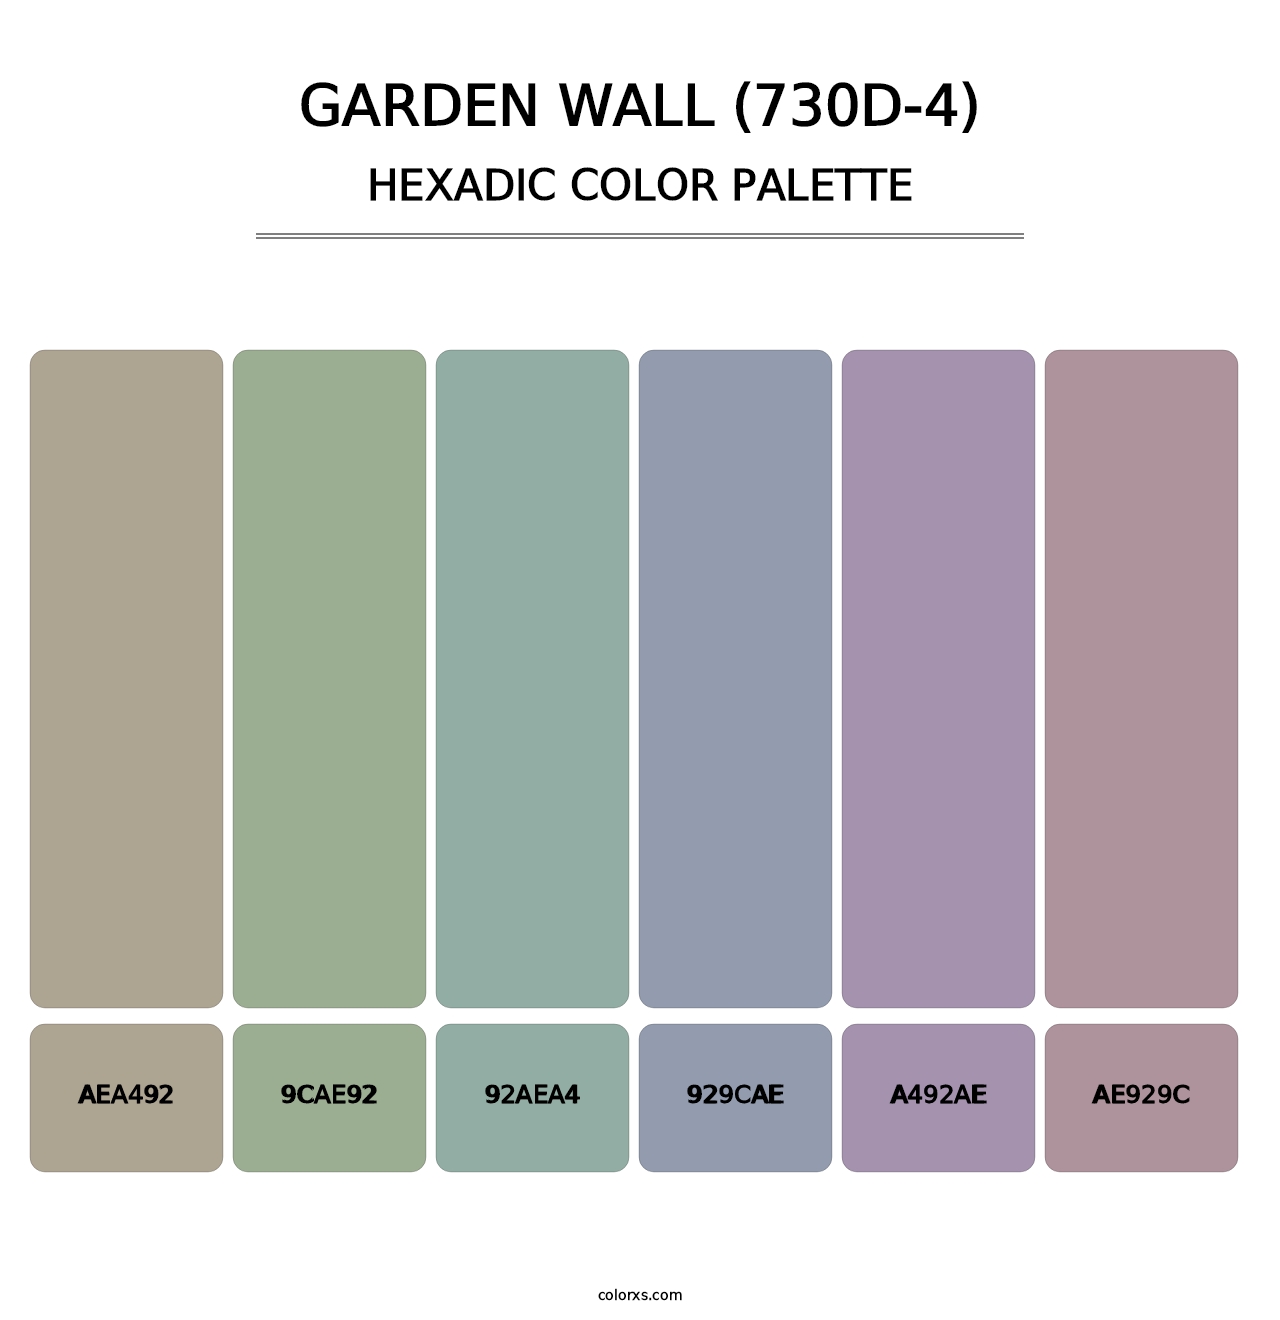 Garden Wall (730D-4) - Hexadic Color Palette